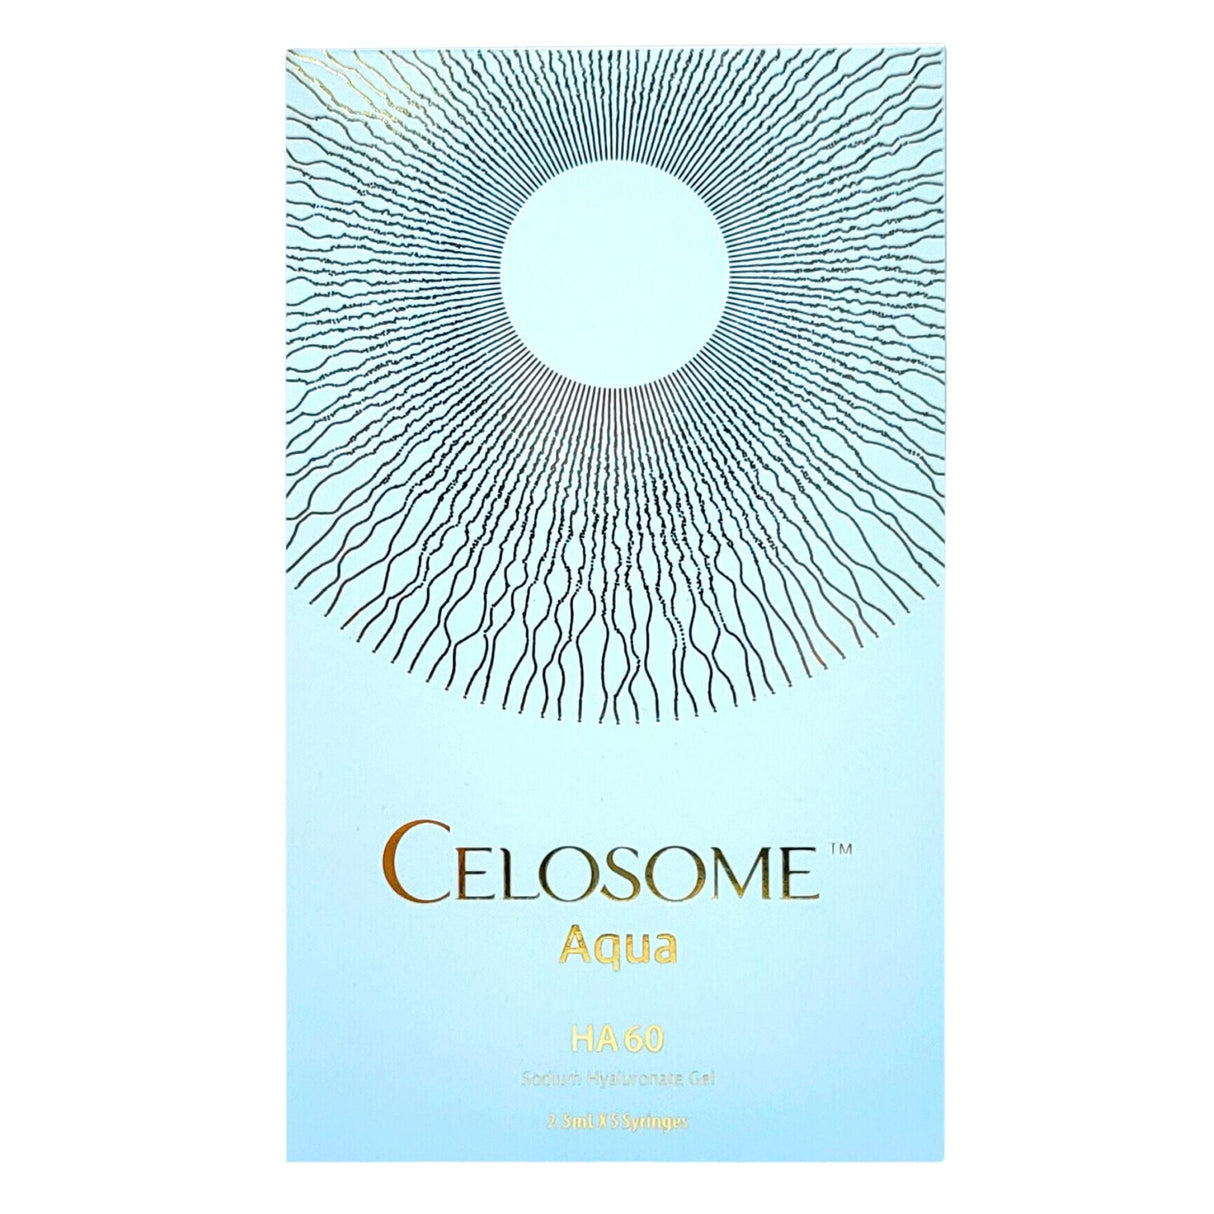 Celosome Aqua - Filler Lux™ - Mesotherapy - ExoCoBio Inc.